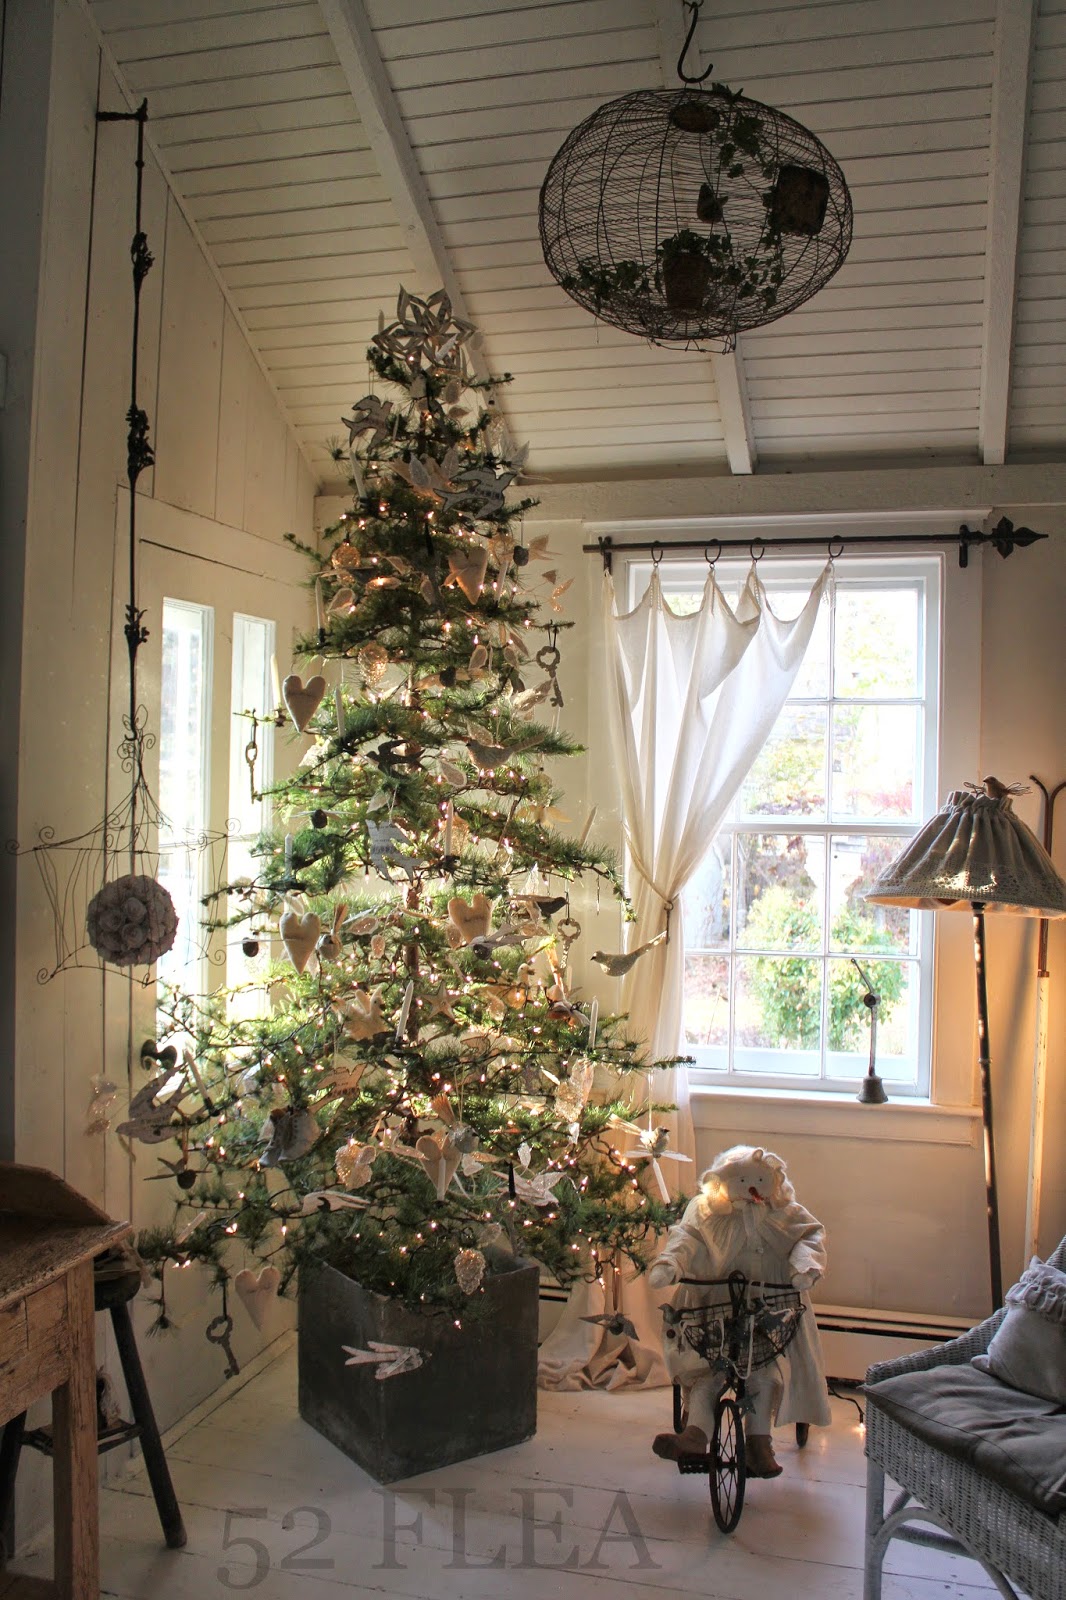 52 FLEA: Paula's Christmas Cottage 2014